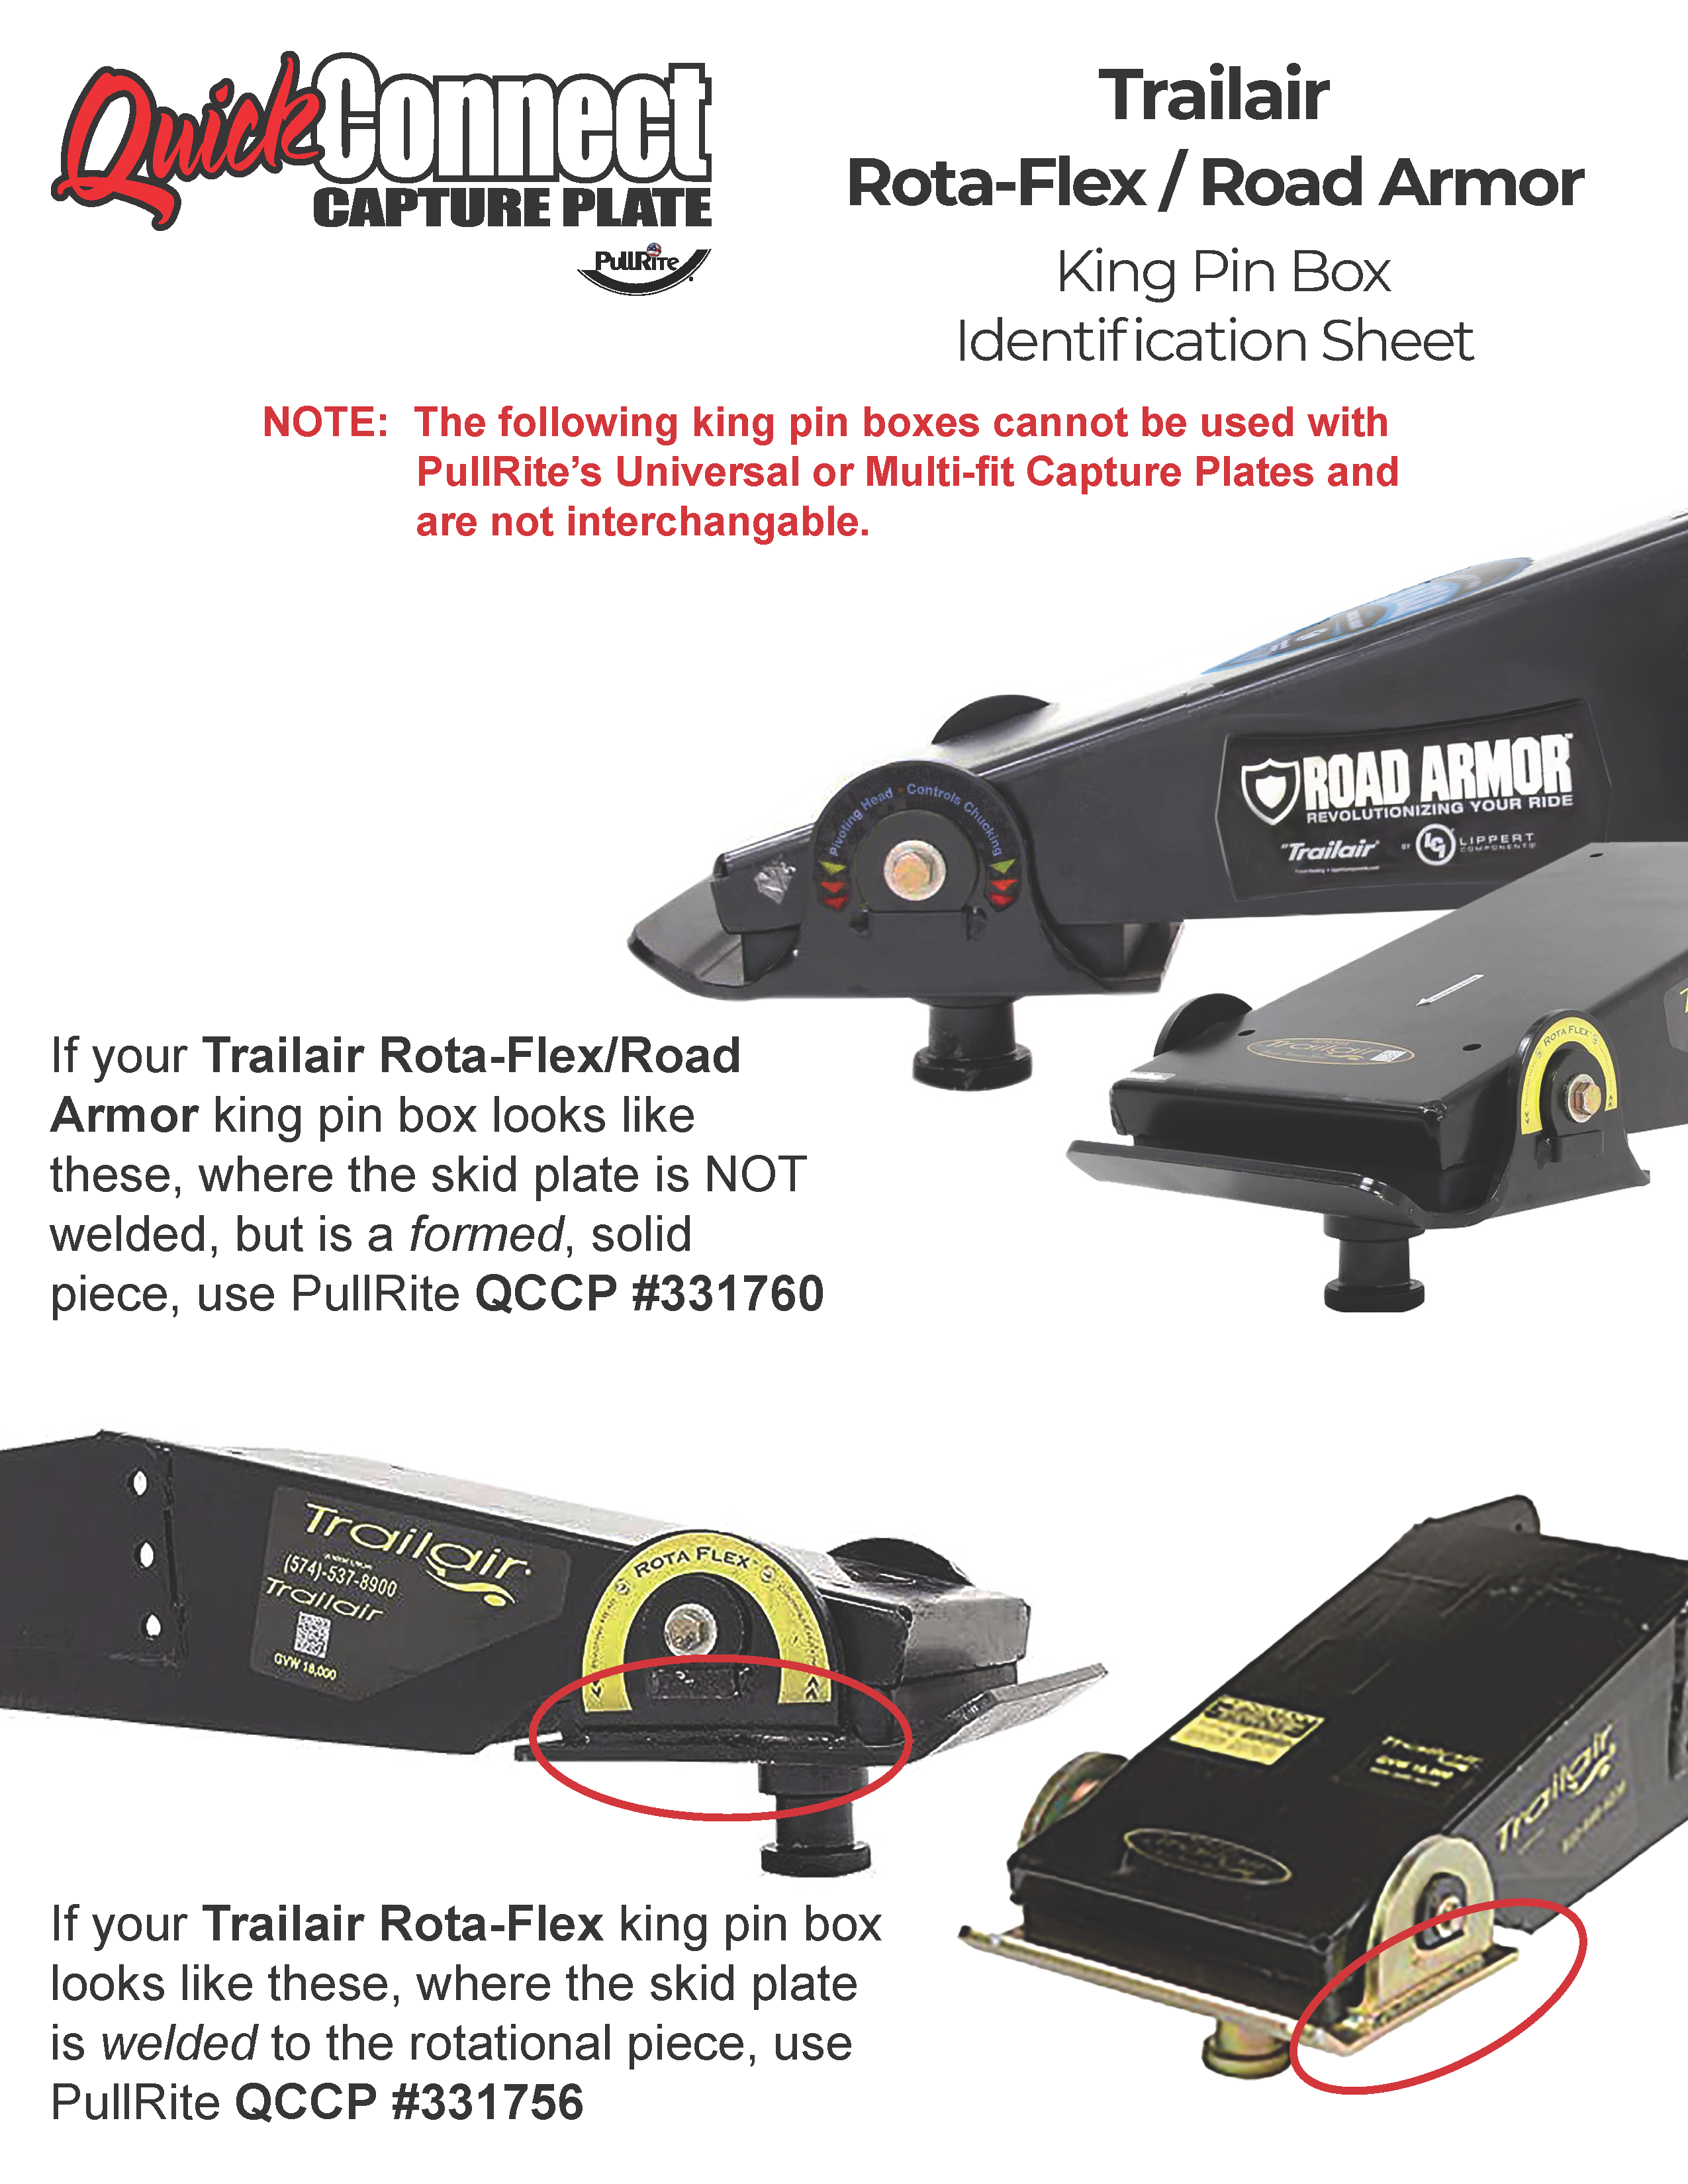 Trailair Rotoflex/Road Armor King PIn ID Sheet